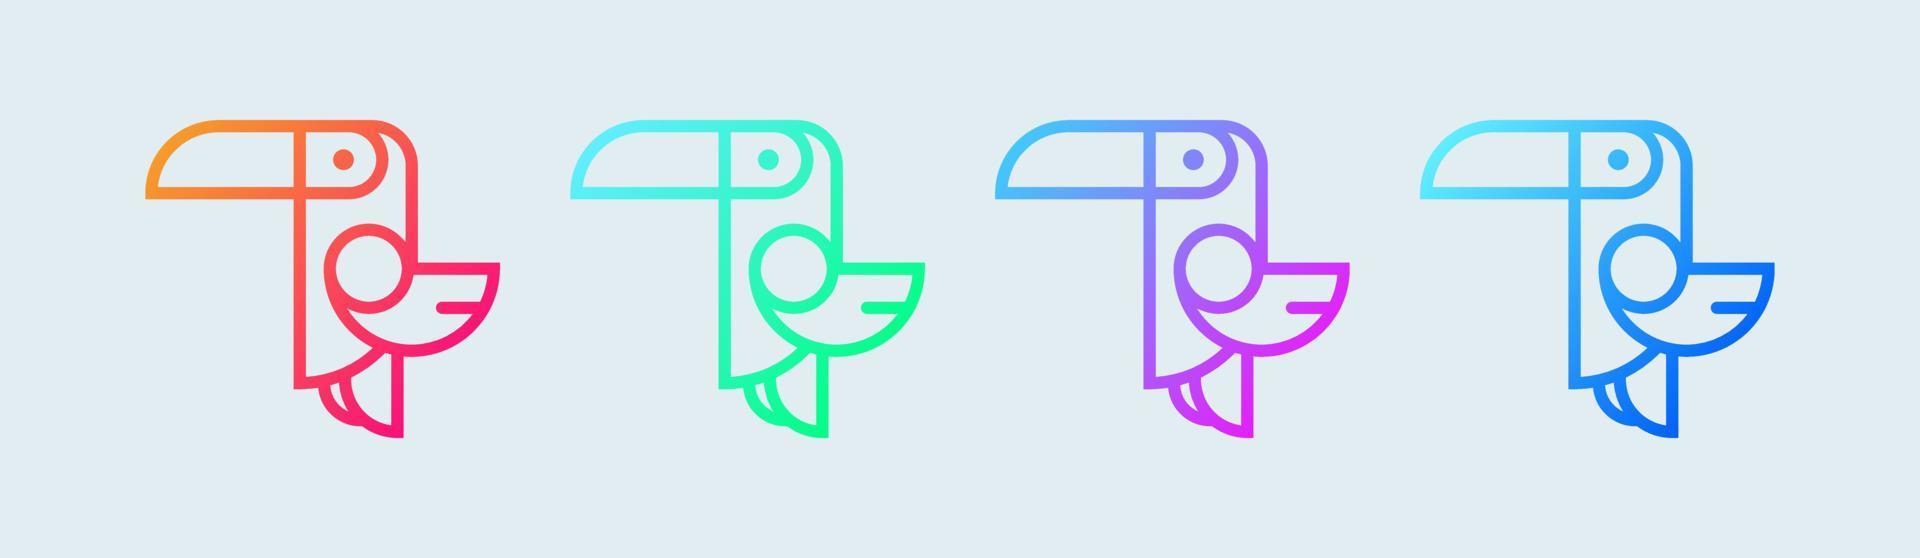 Toucan line icon in gradient colors. Simple bird logotype vector illustration.